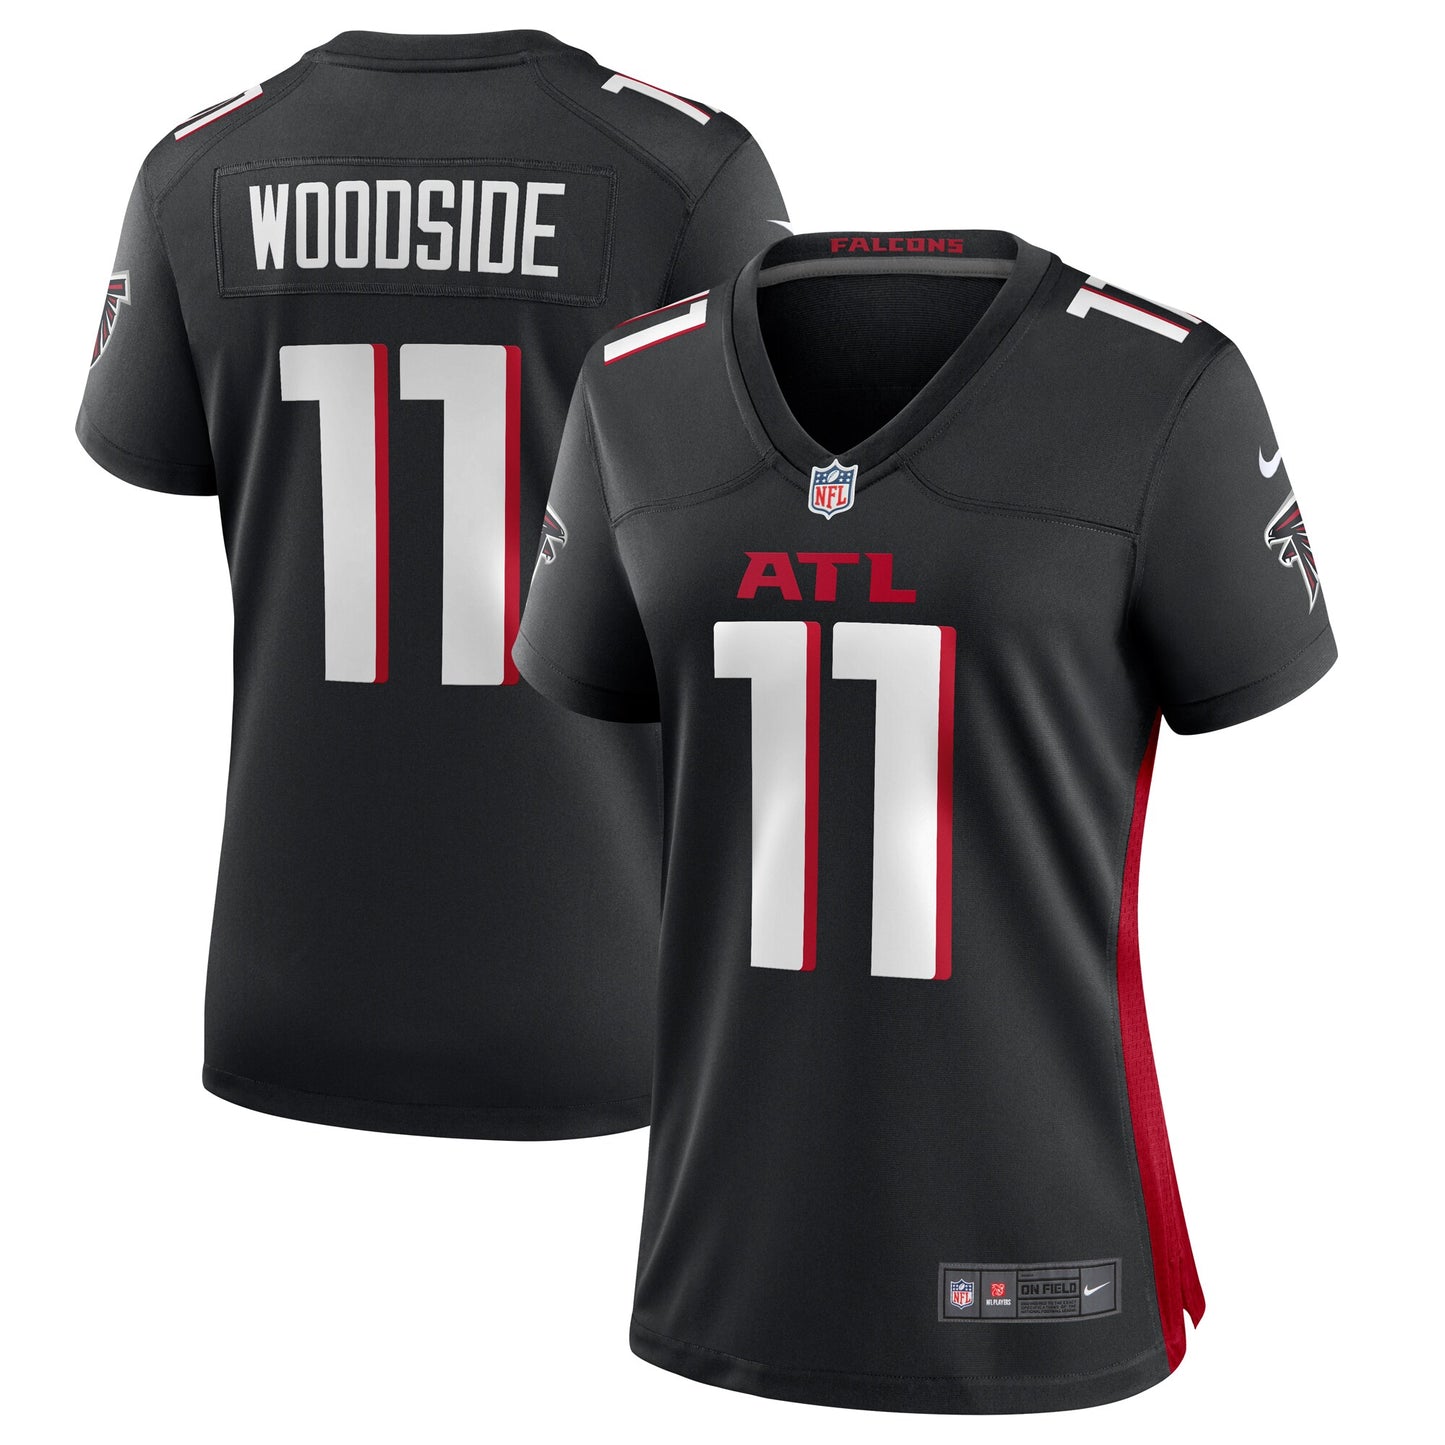 Logan Woodside Atlanta Falcons Nike Women's Team Game Jersey - Black